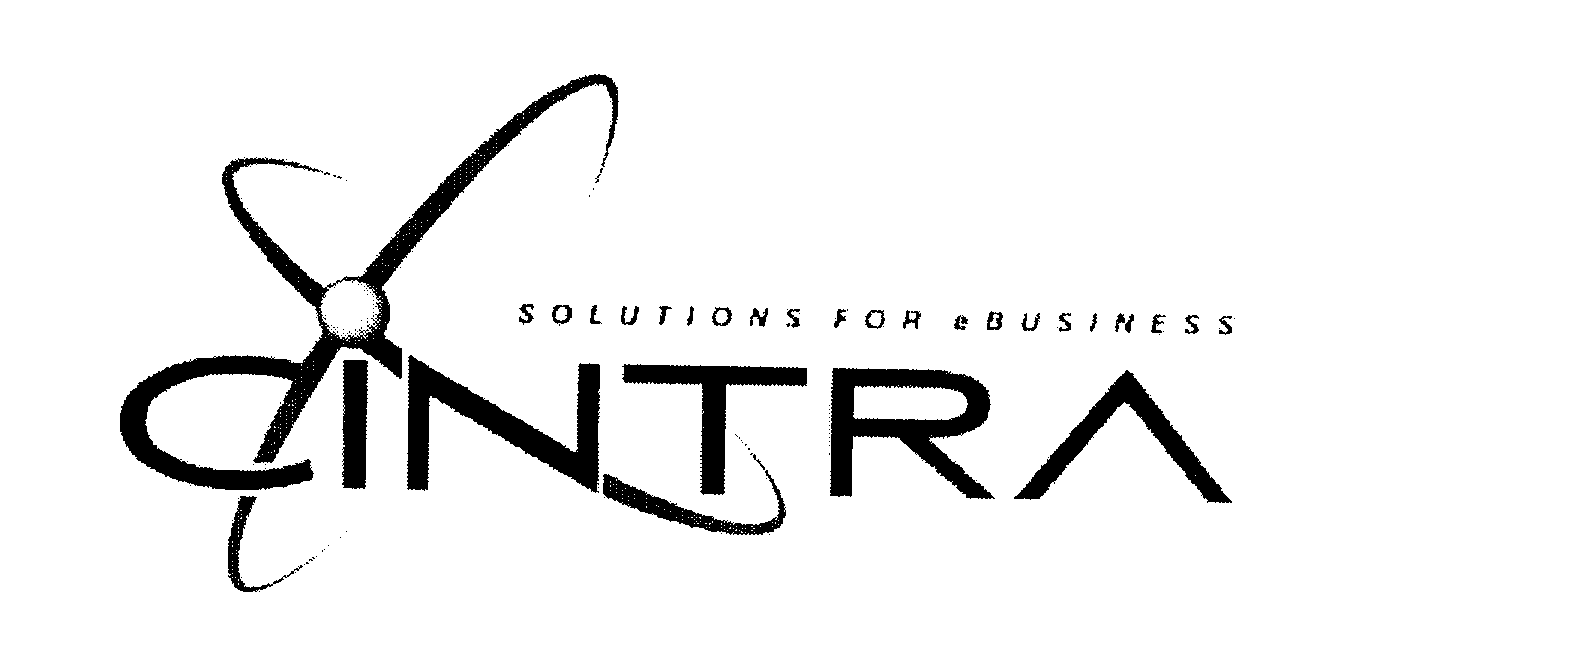 Trademark Logo CINTRA